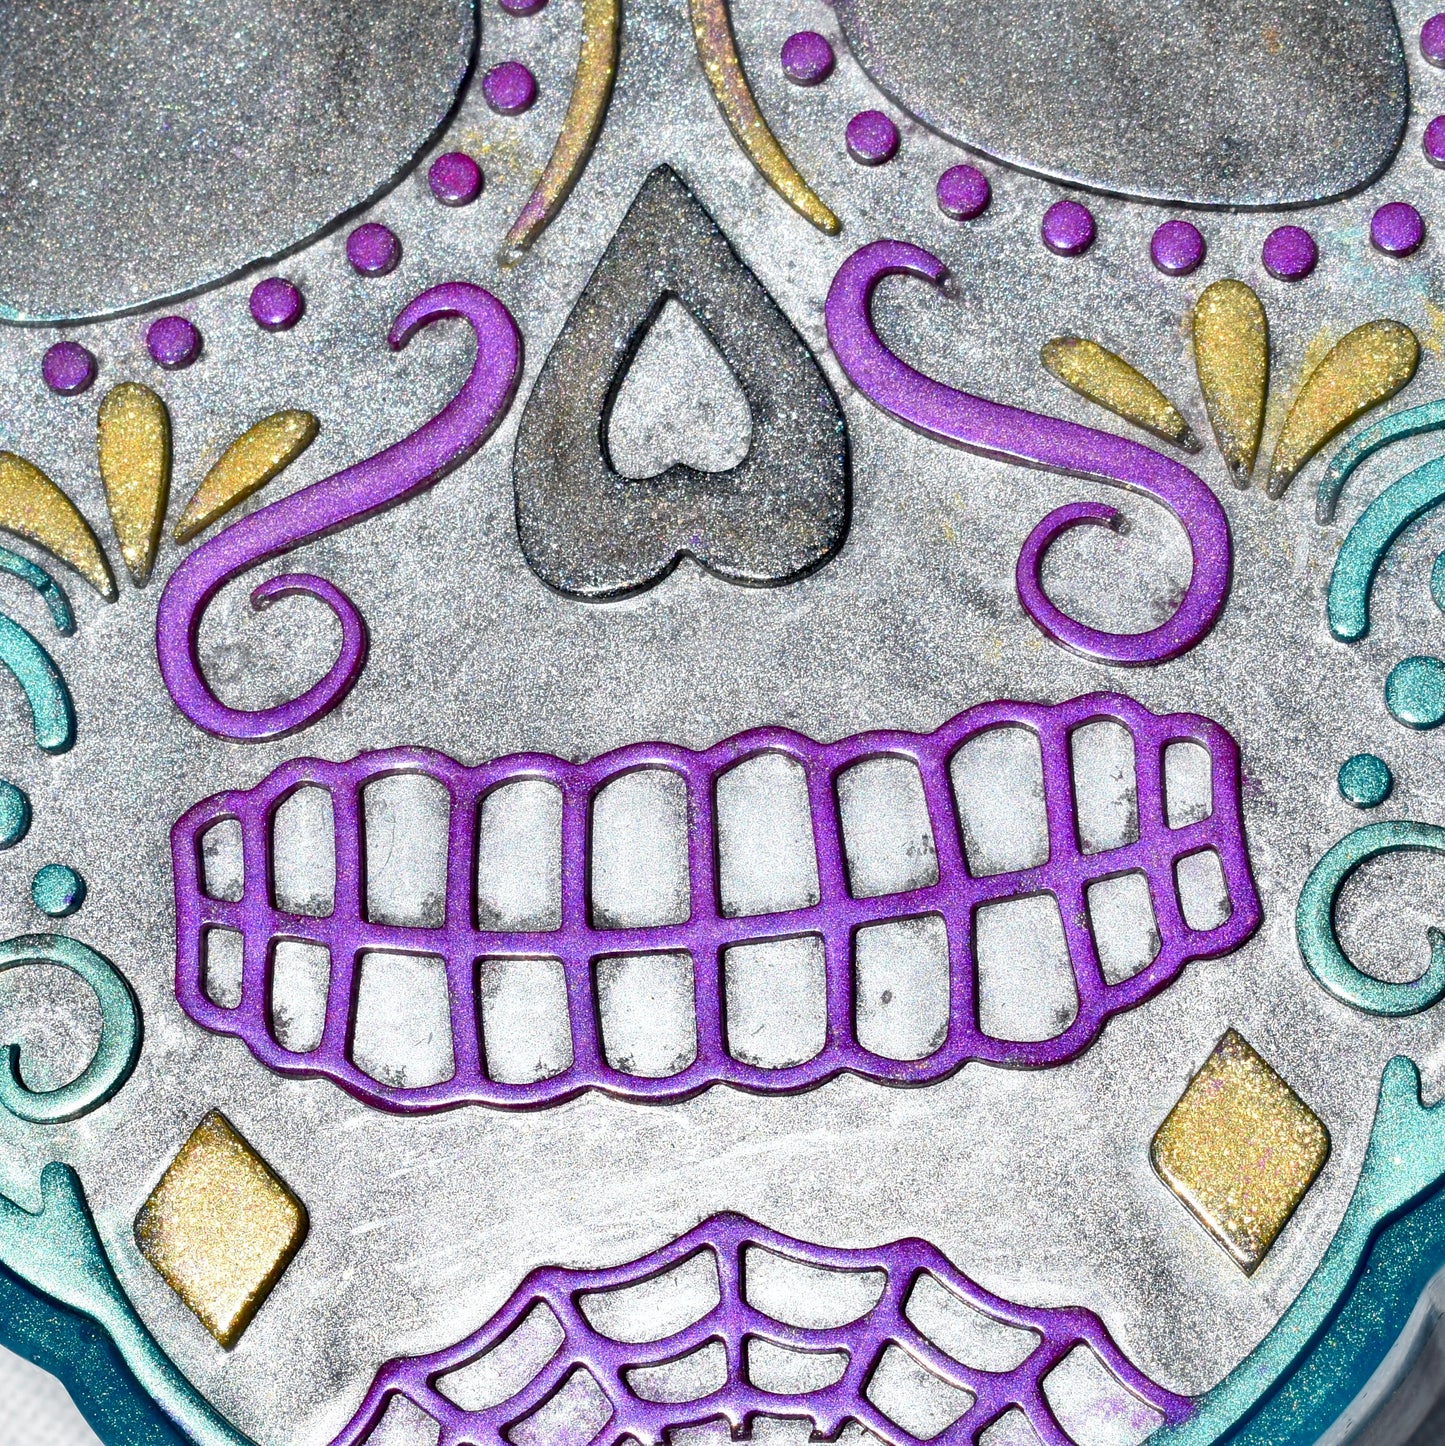 Sugar Skull Candy Dish w Lid • Dia de Los Muertos Dish Gift • Halloween Decor